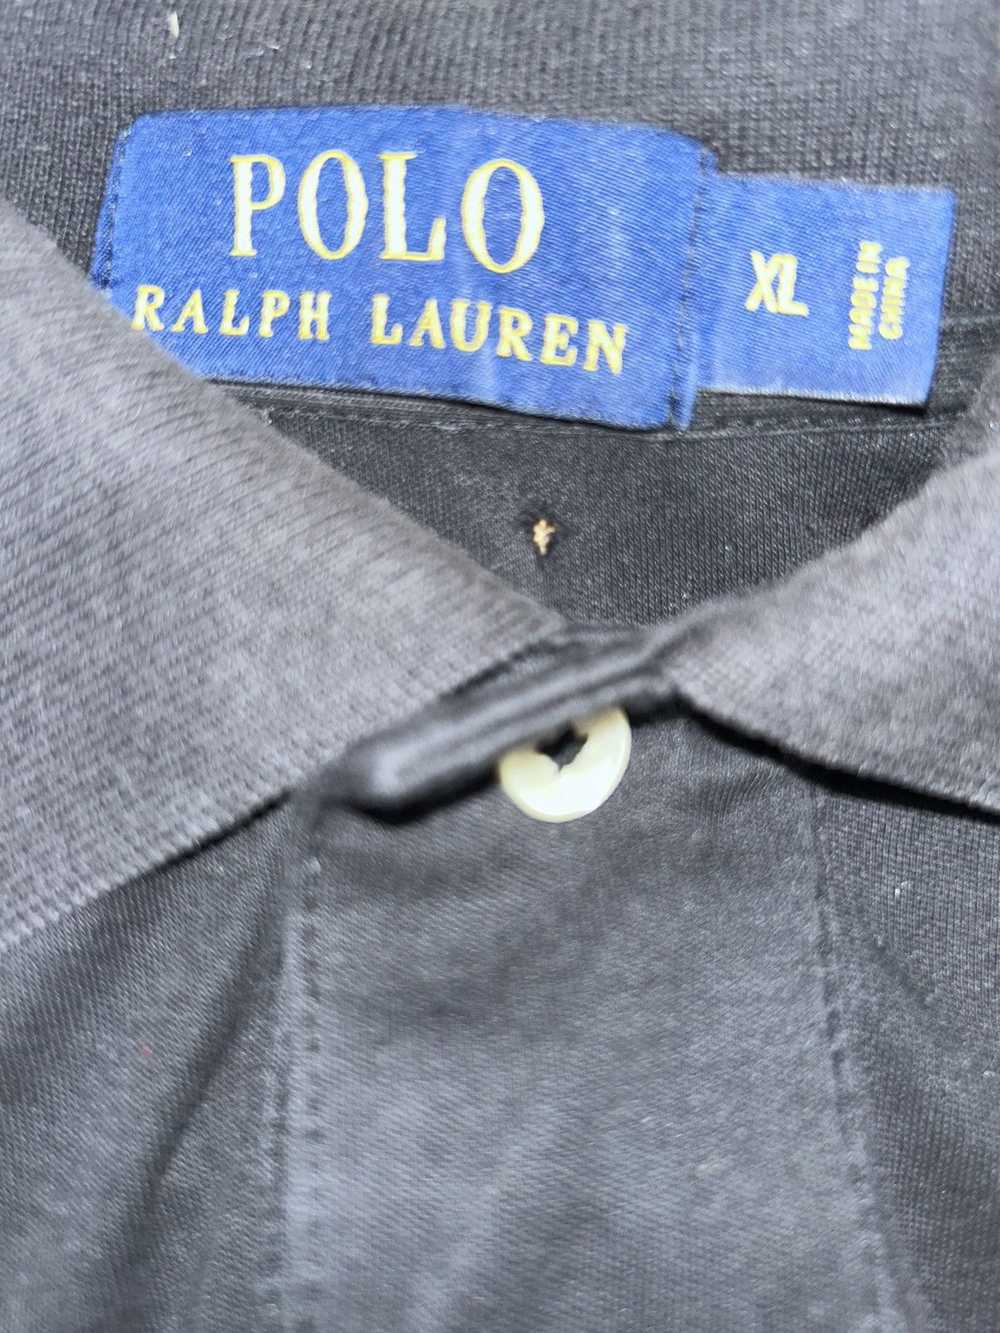 Polo Ralph Lauren Colored Black Polo - image 3